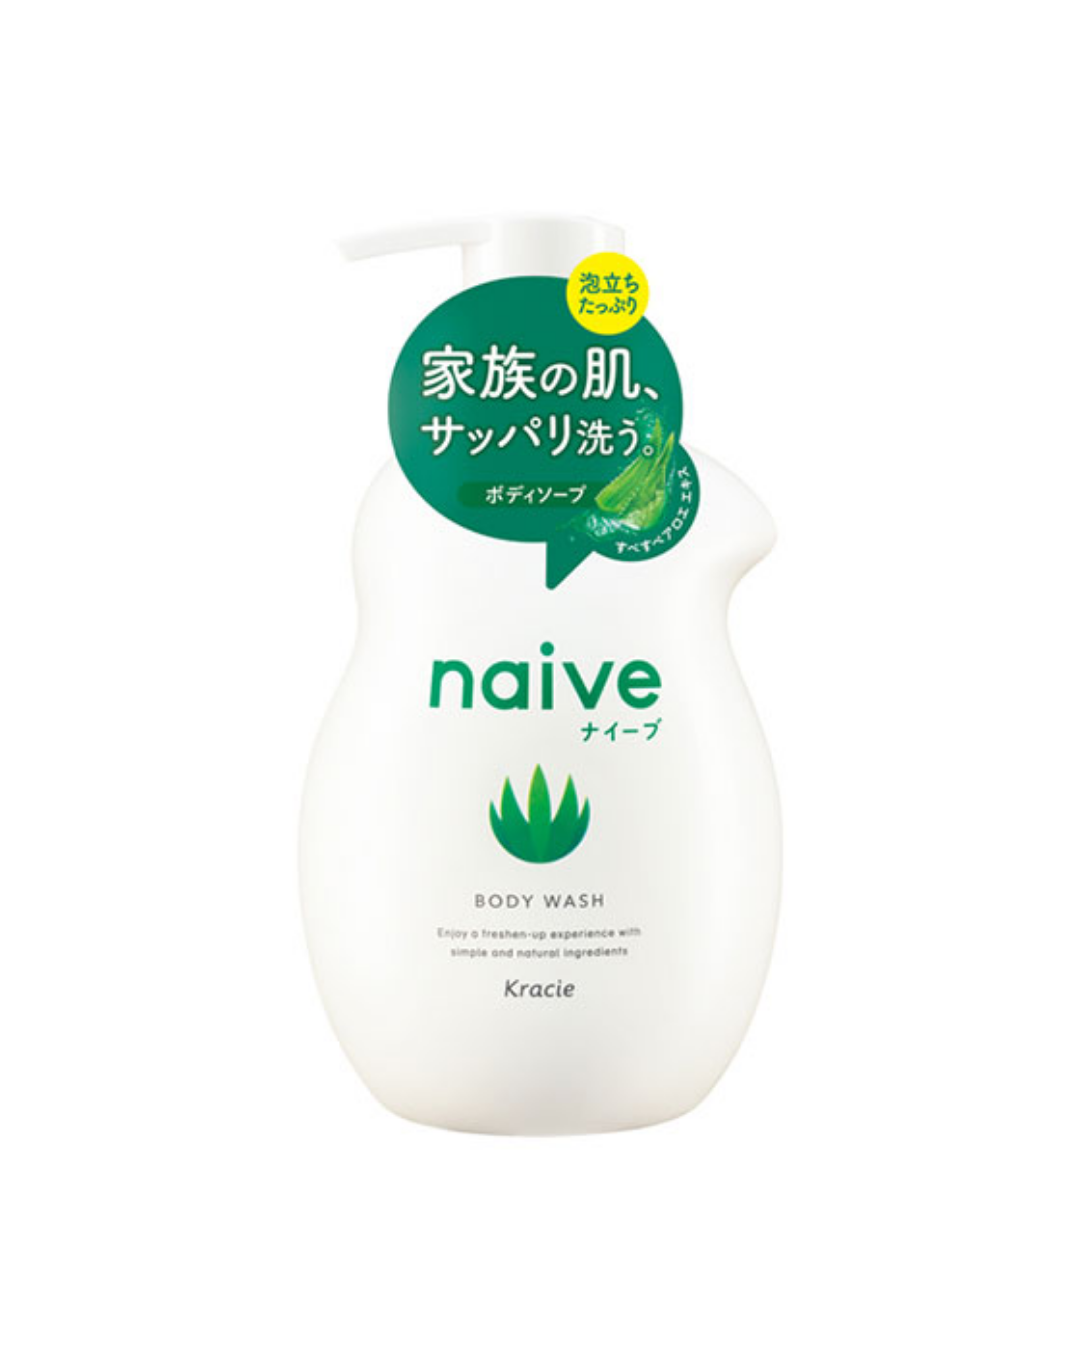 kracie-kanebo-naive-natural-plant-essence-body-wash-aloe-vera-scent